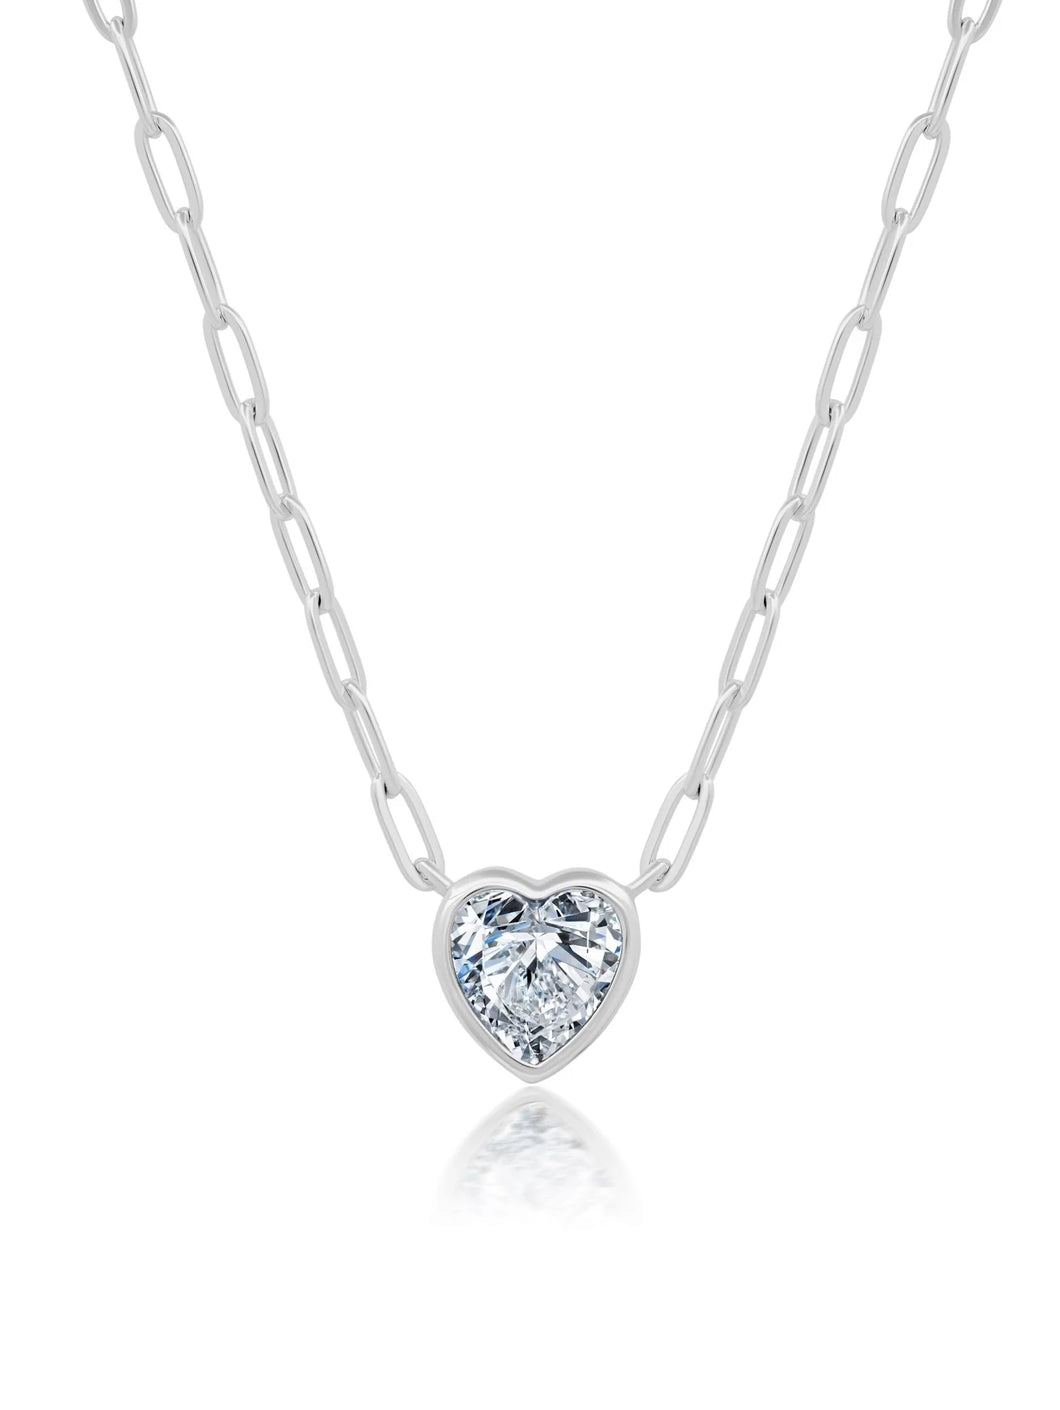 Crislu Heart Shaped Bezel Set Paperclip Necklace Finished in Pure Platinum